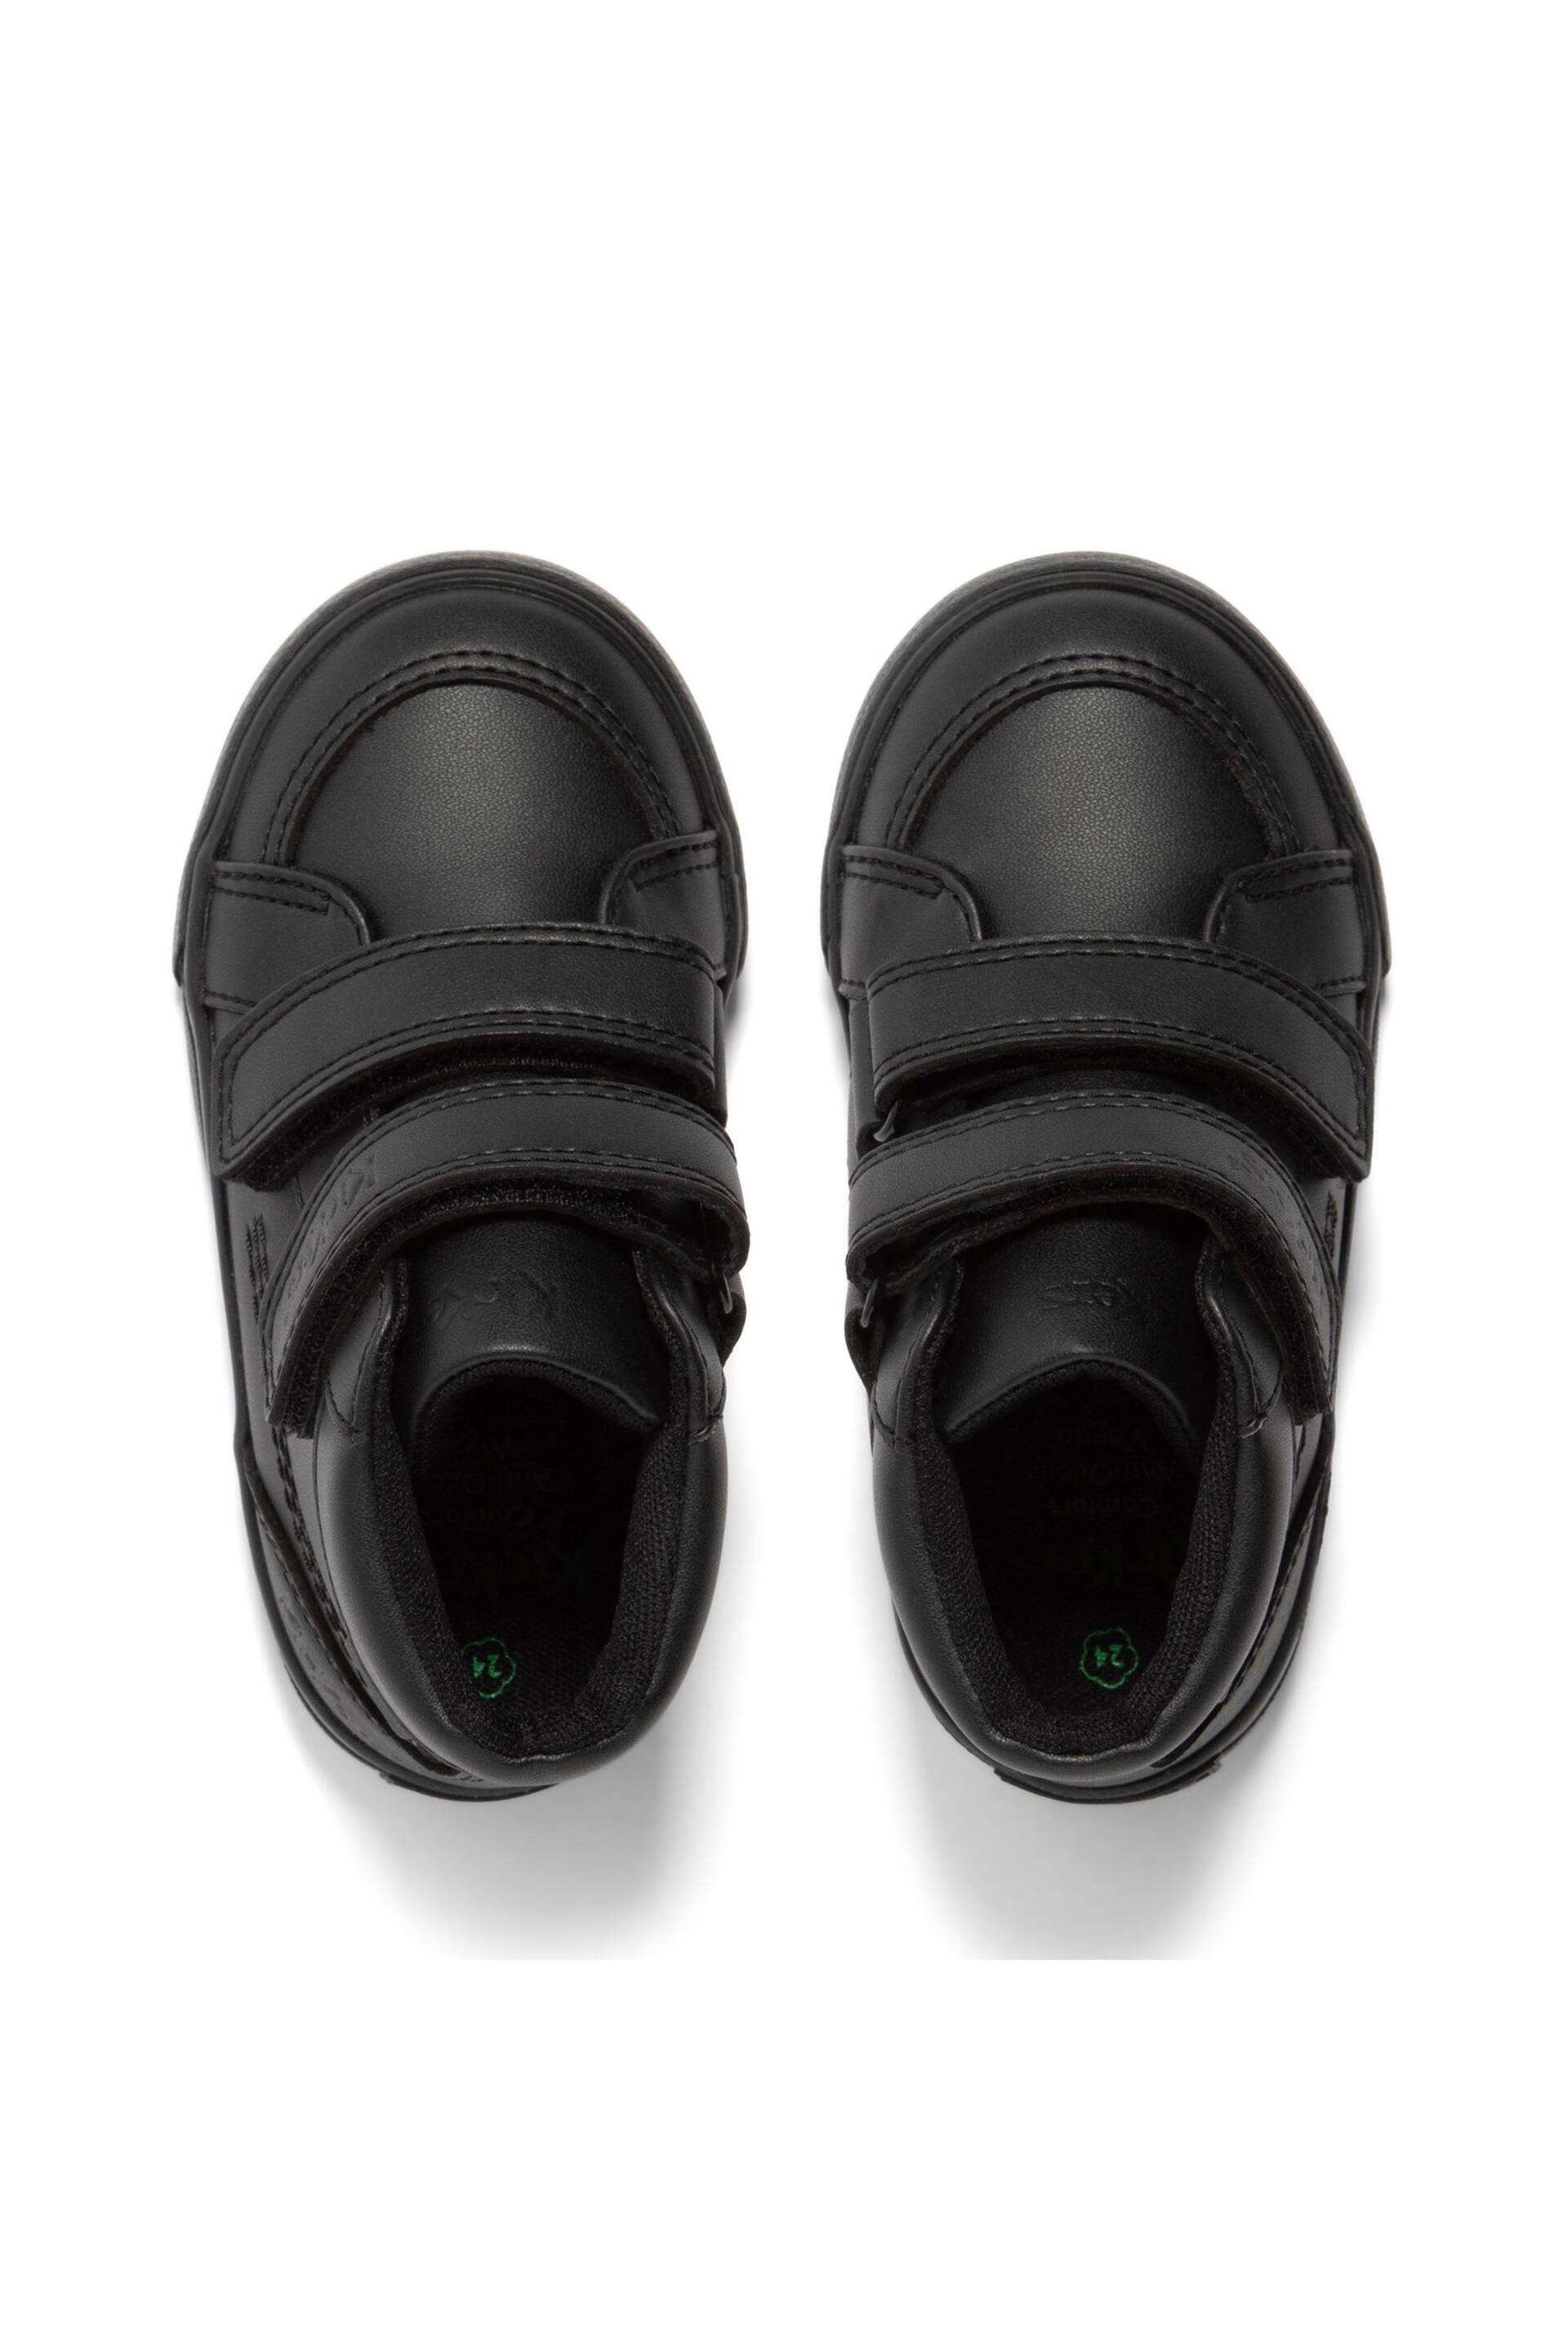 Kickers Infant Unisex Tovni Hi Vel Vegan Black Shoes - Image 5 of 6